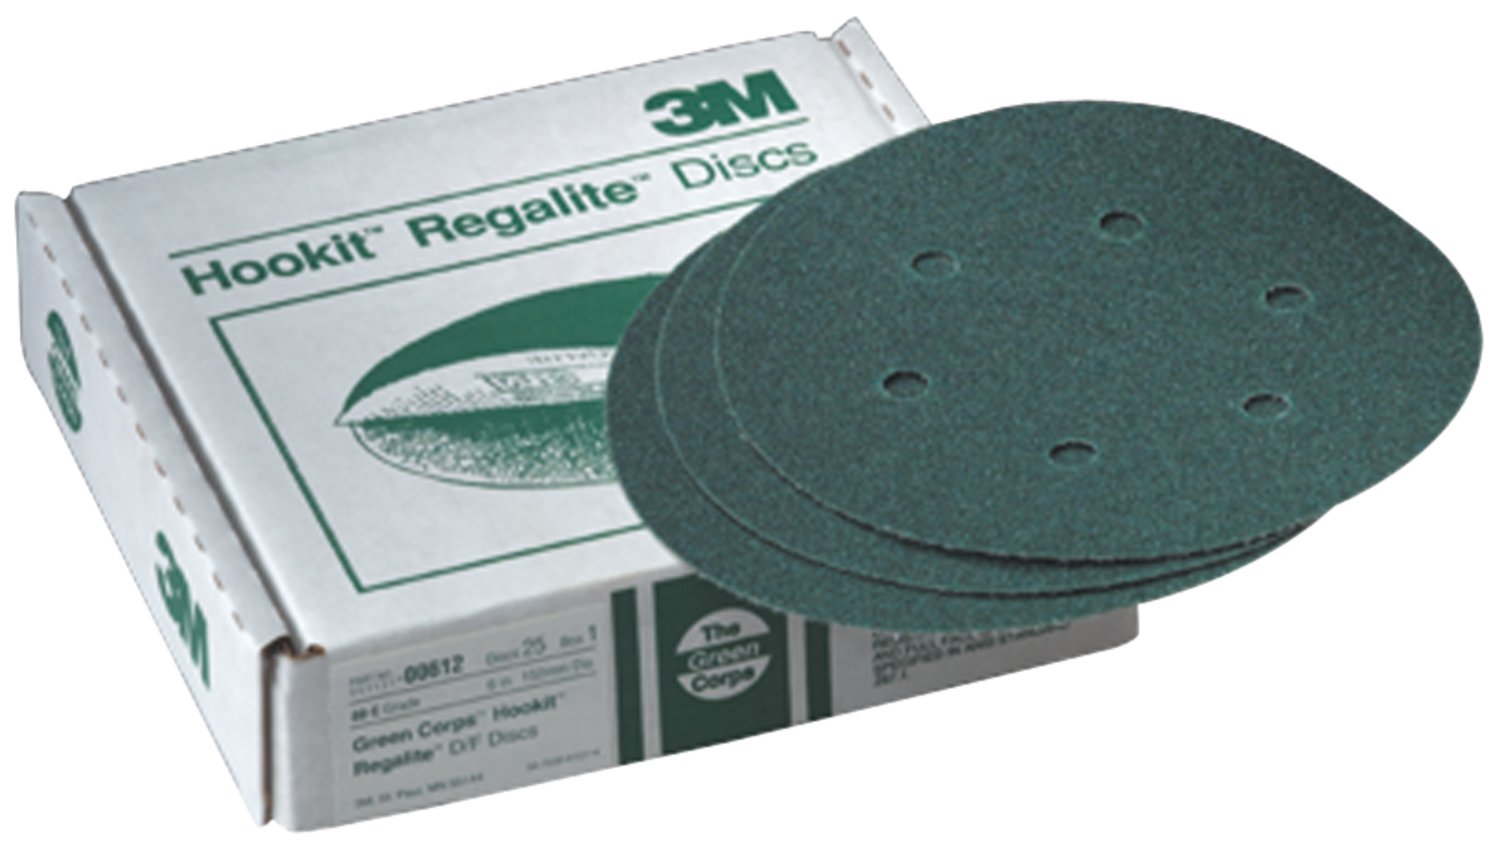 7100009351 - 3M Green Corps Hookit Disc Dust Free, 00612, 6 in, 80, 25 discs per
carton, 5 cartons per case